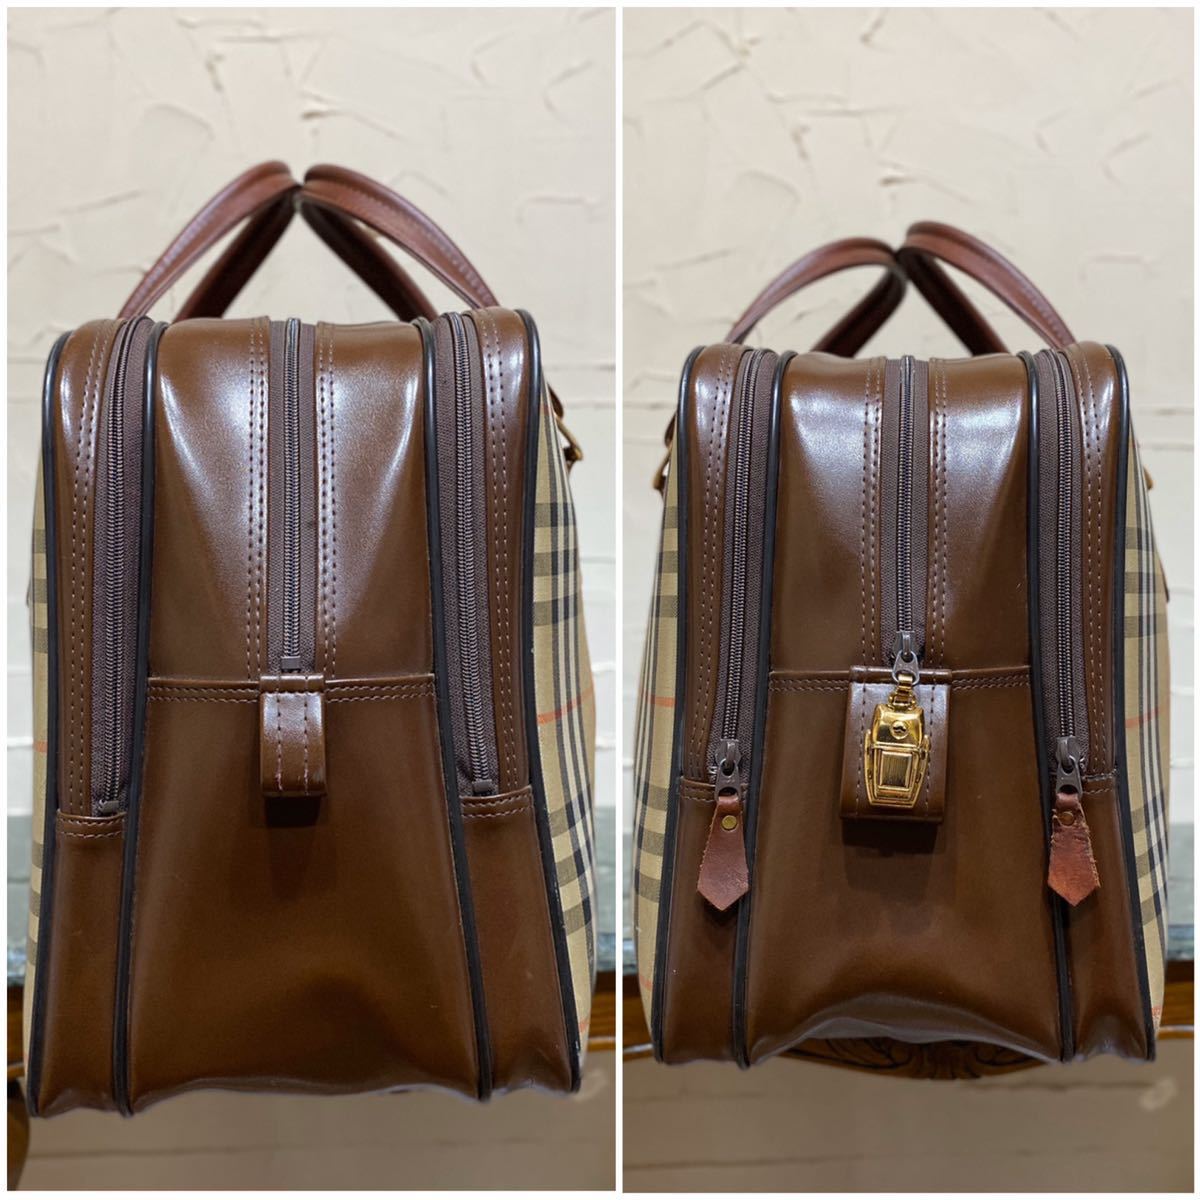  редкий дизайн VINTAGE OLD Burberrys сумка "Boston bag" портфель путешествие сумка Vintage сумка Burberry znoba проверка ручная сумочка 